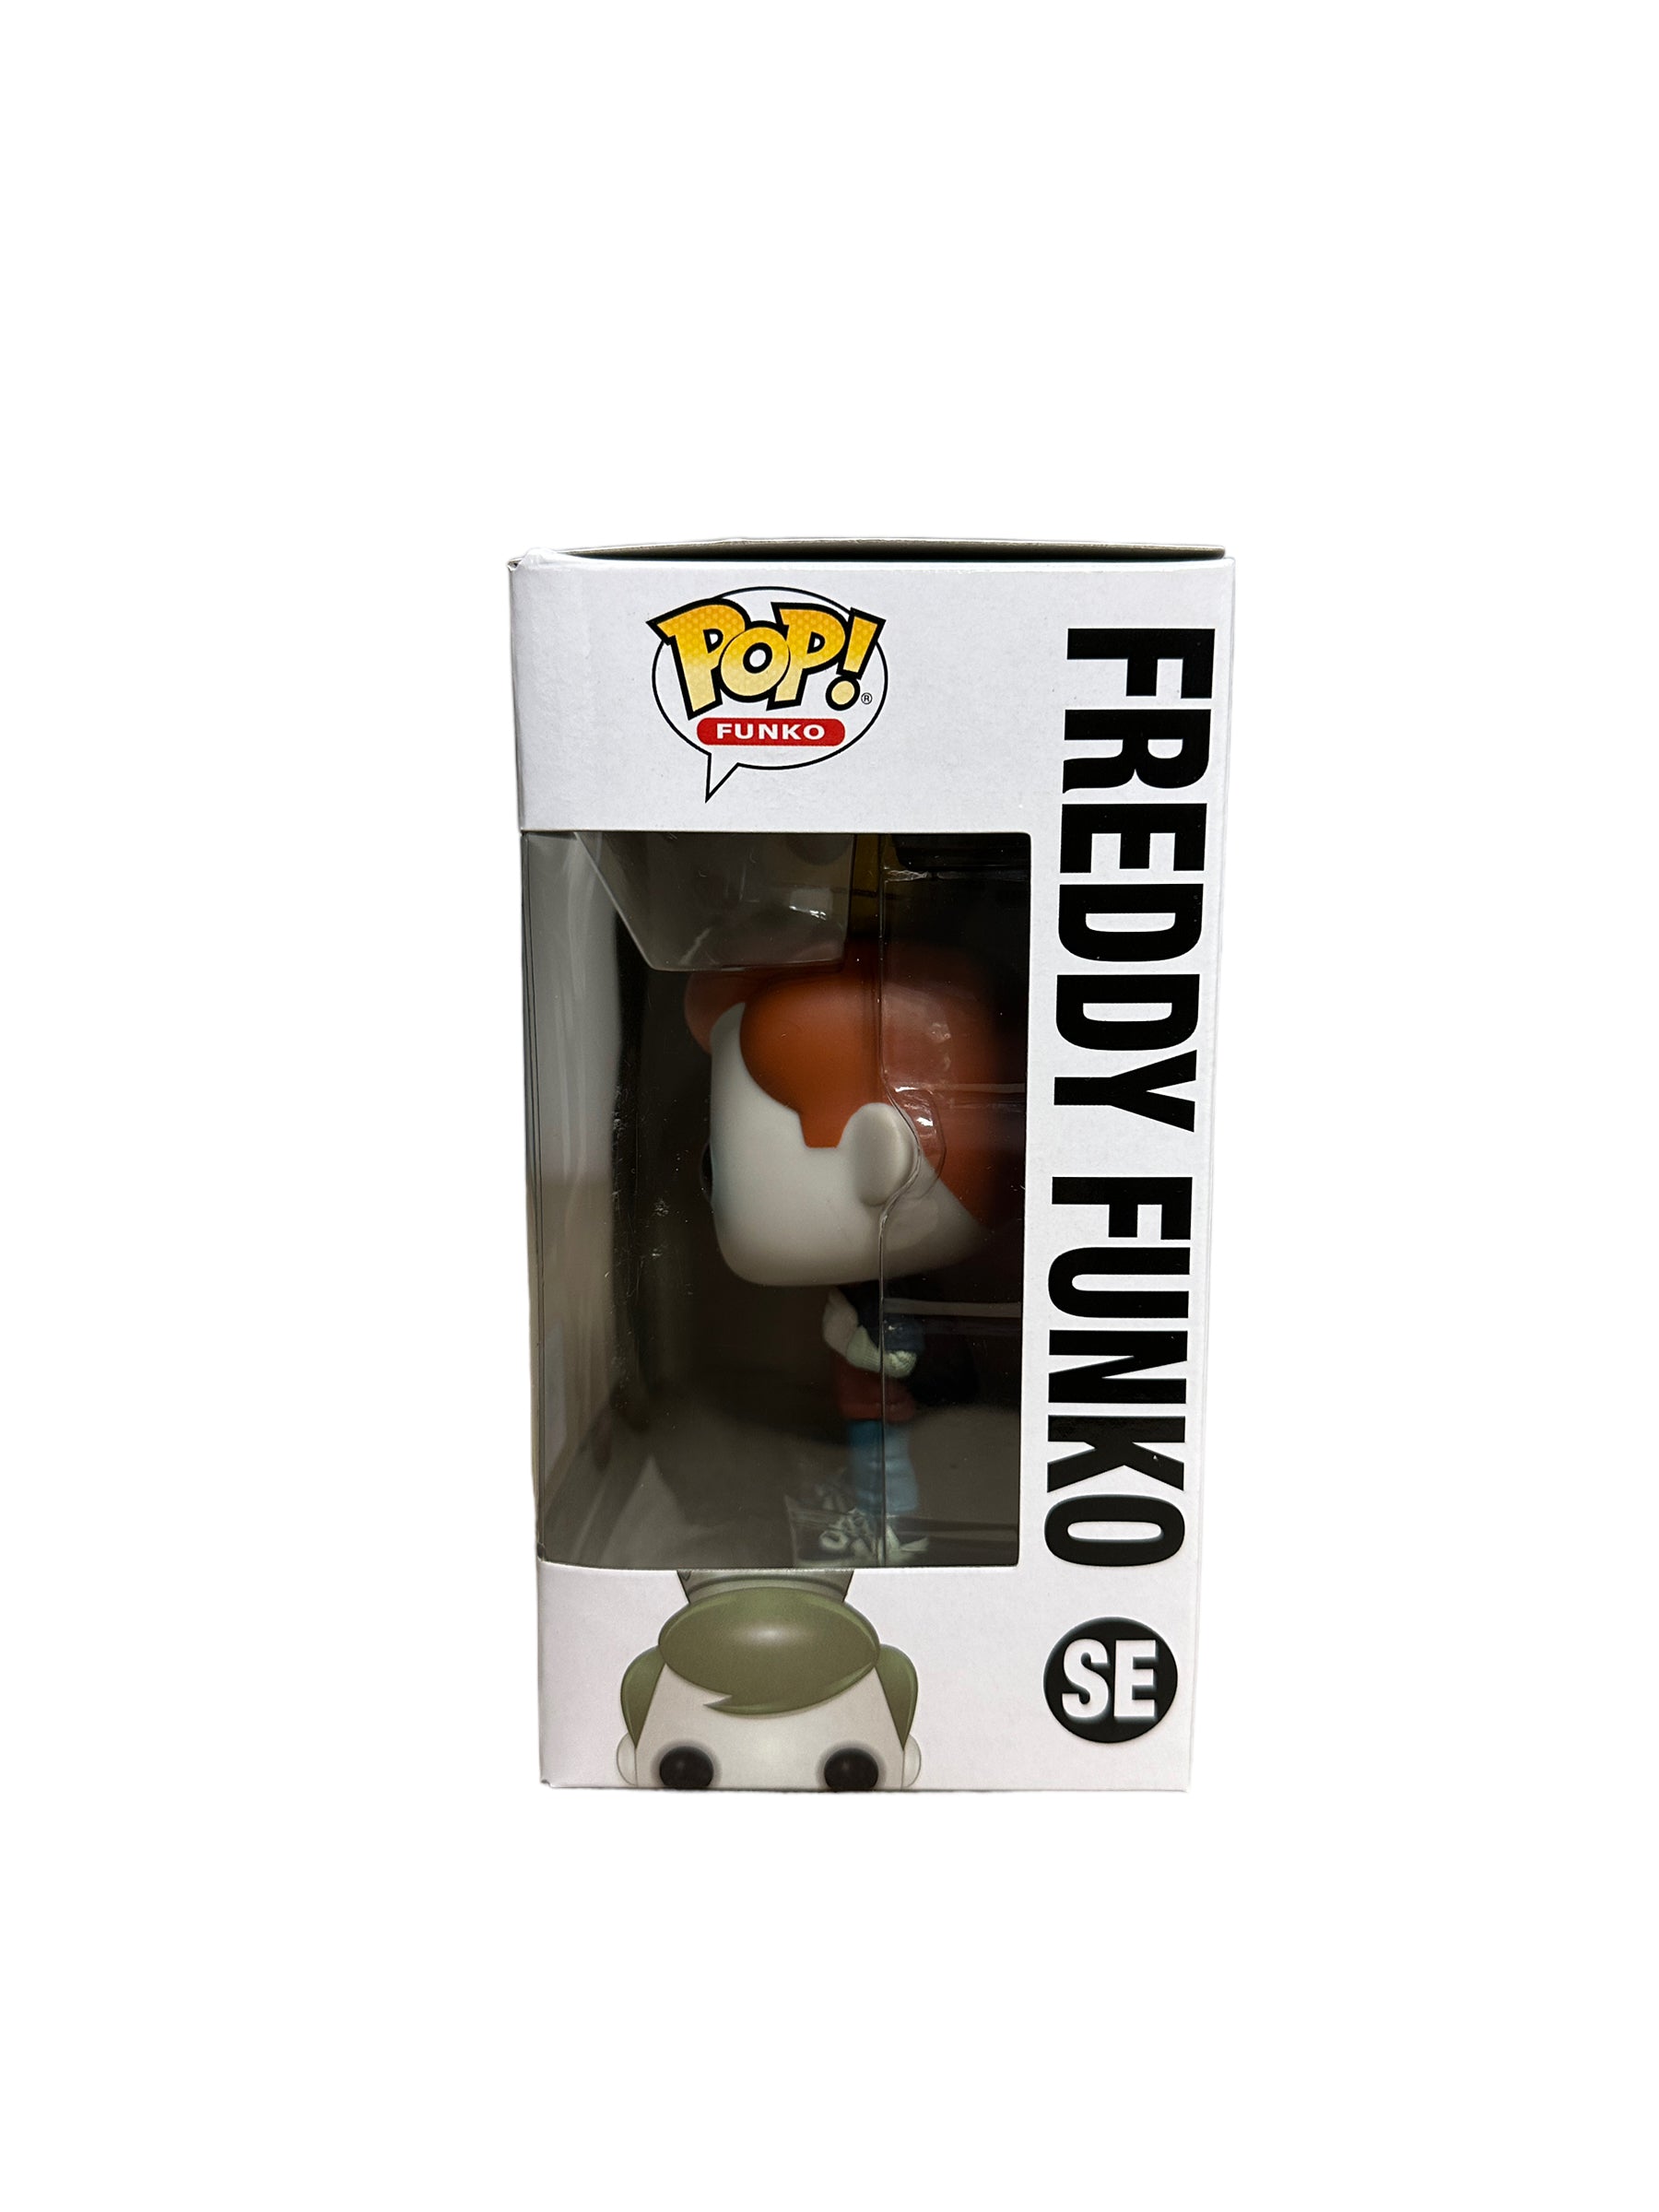 Freddy Funko as Upside Down Will Funko Pop! - SDCC 2018 Exclusive LE450 Pcs - Condition 8.75/10